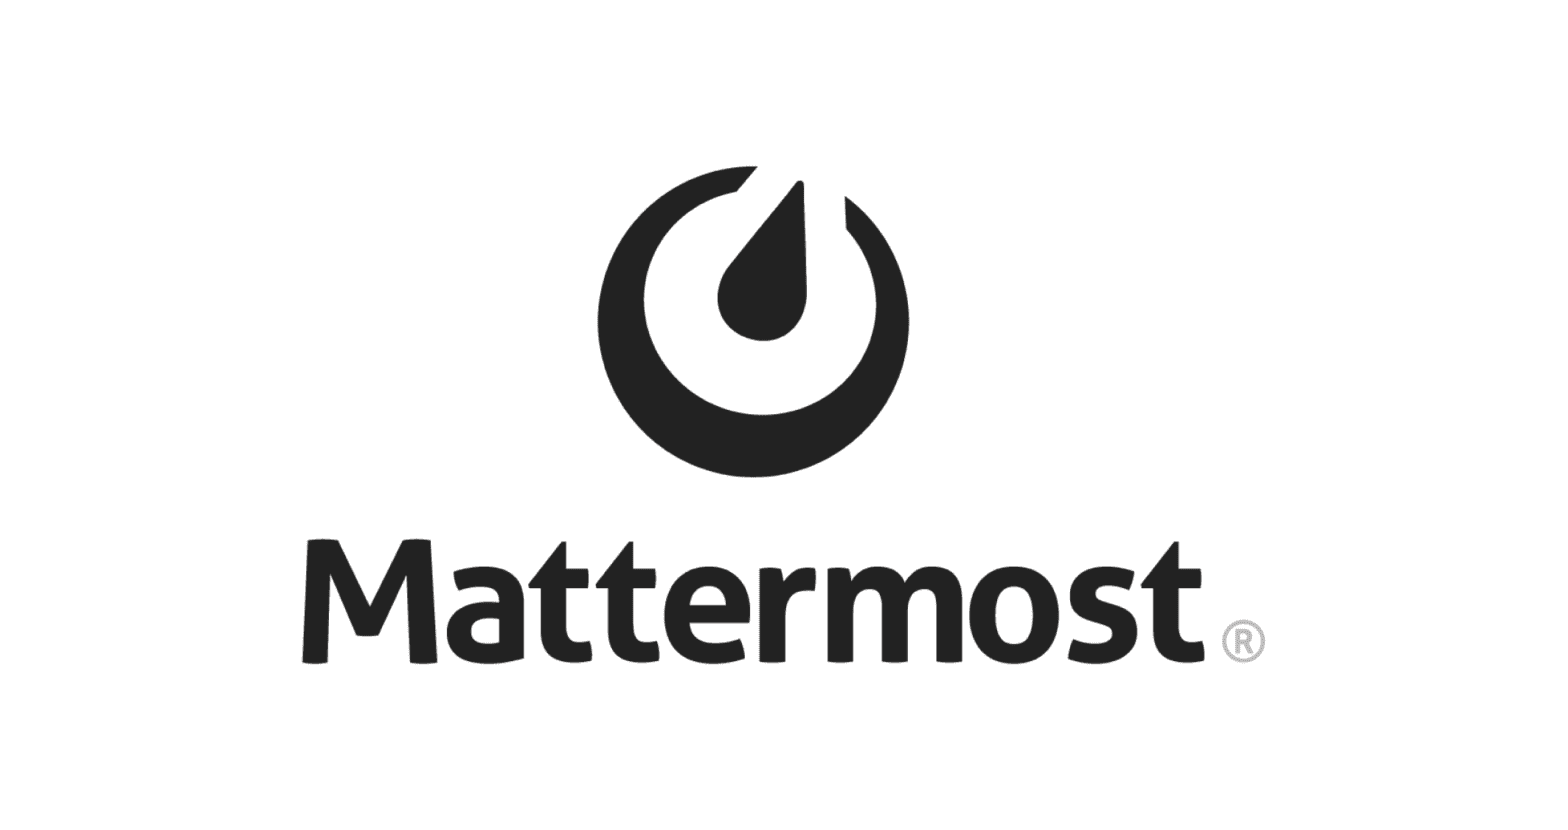 Mattermost